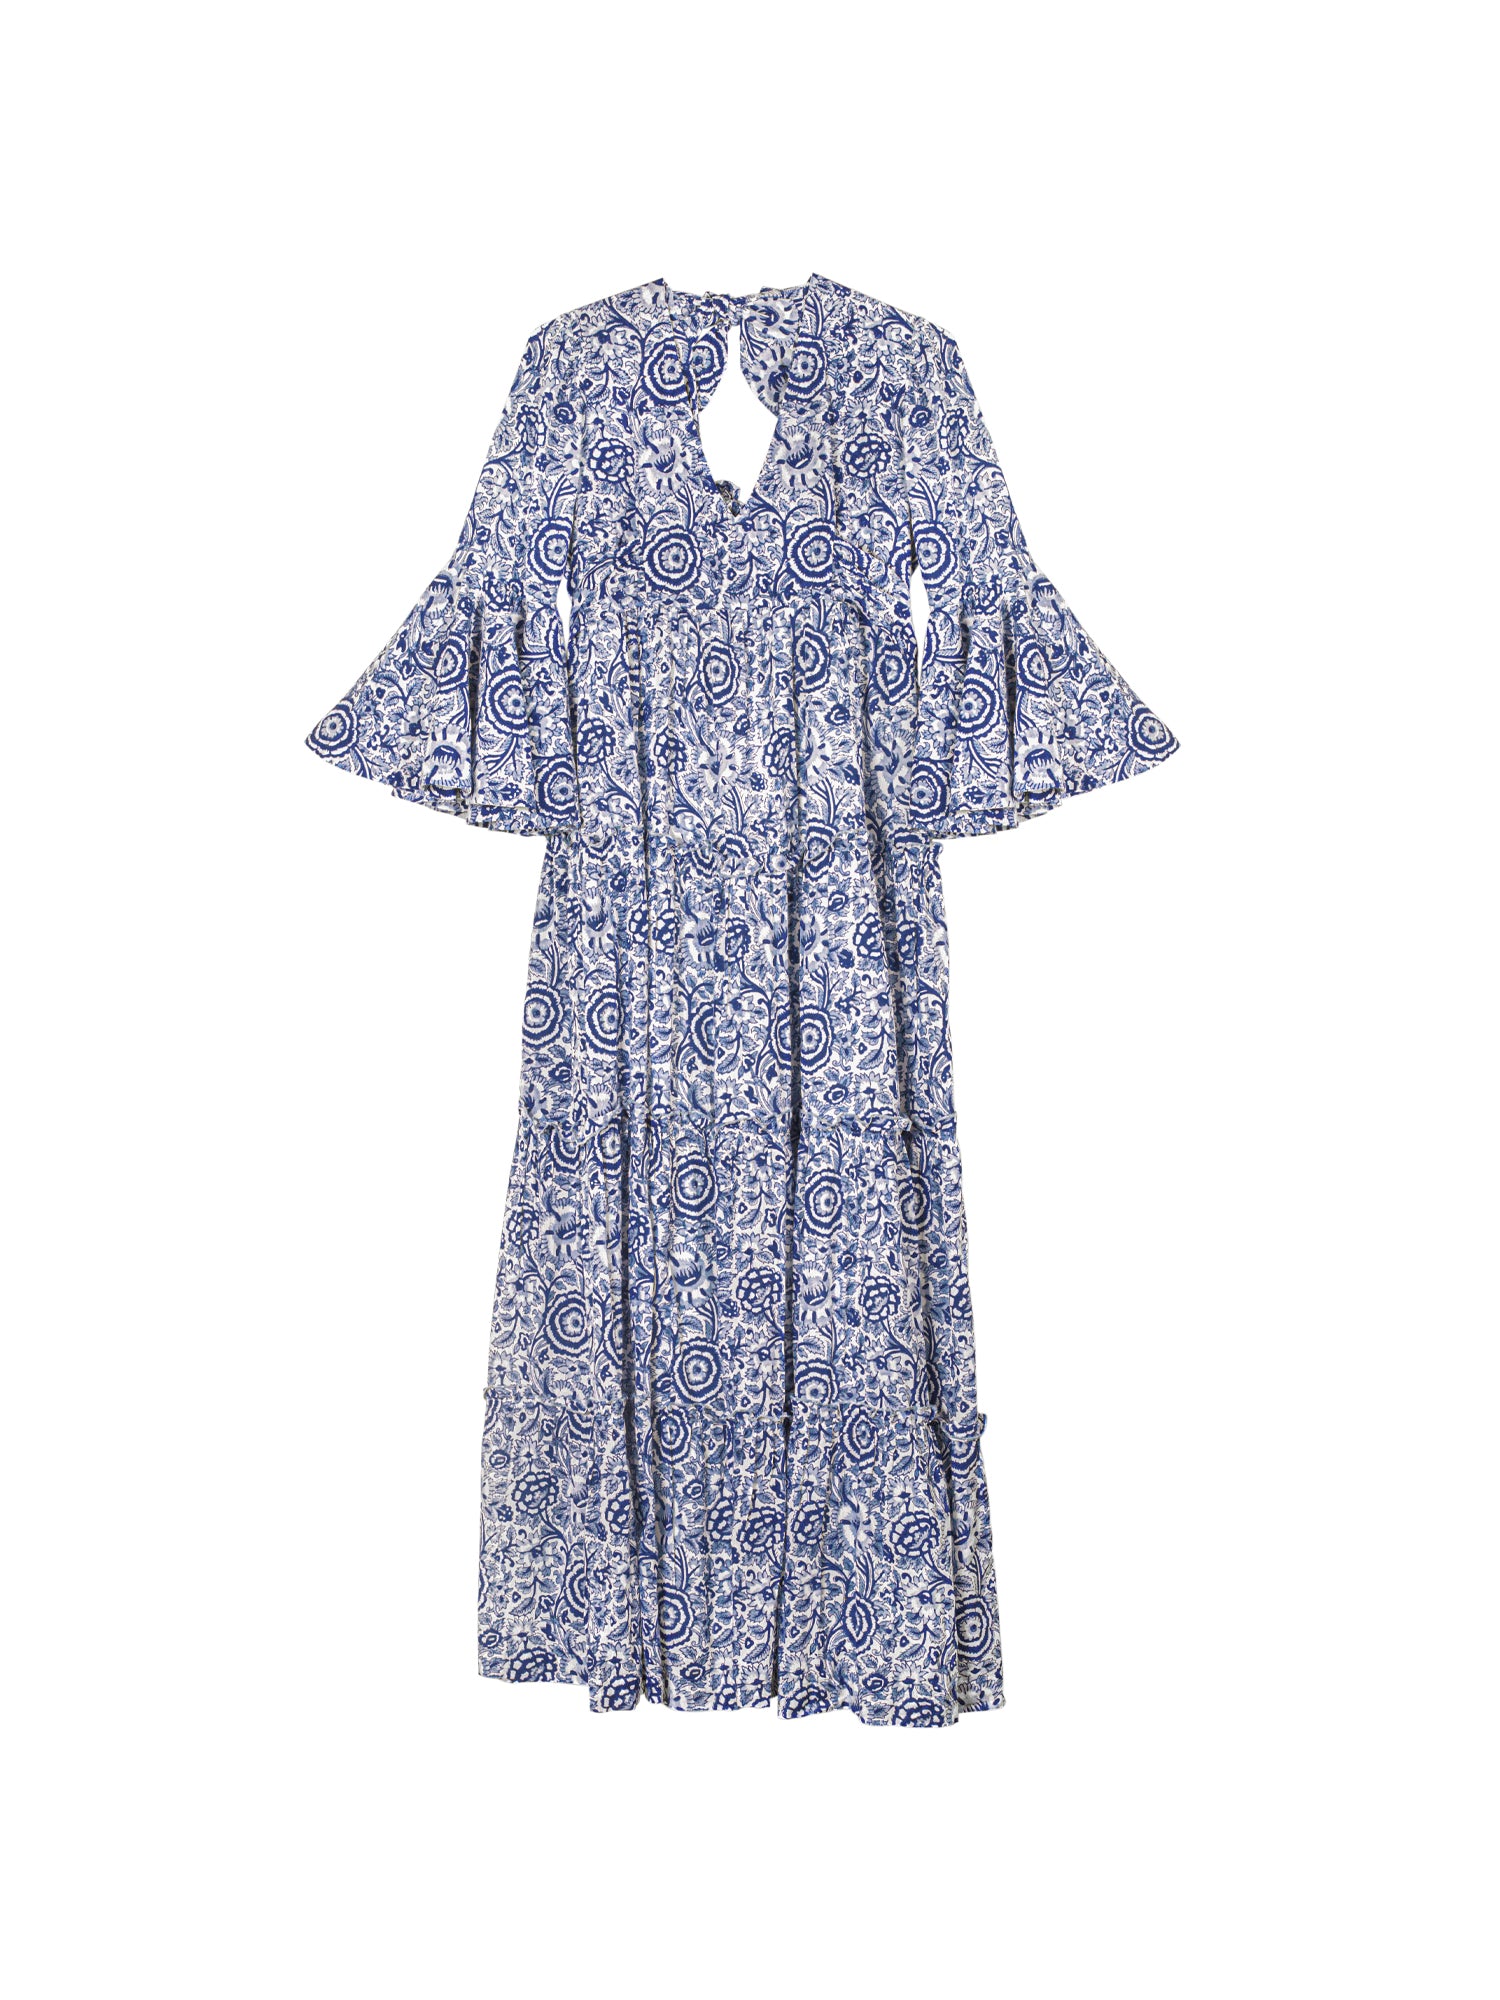 Block Printed Women's Dress - Blue Floral